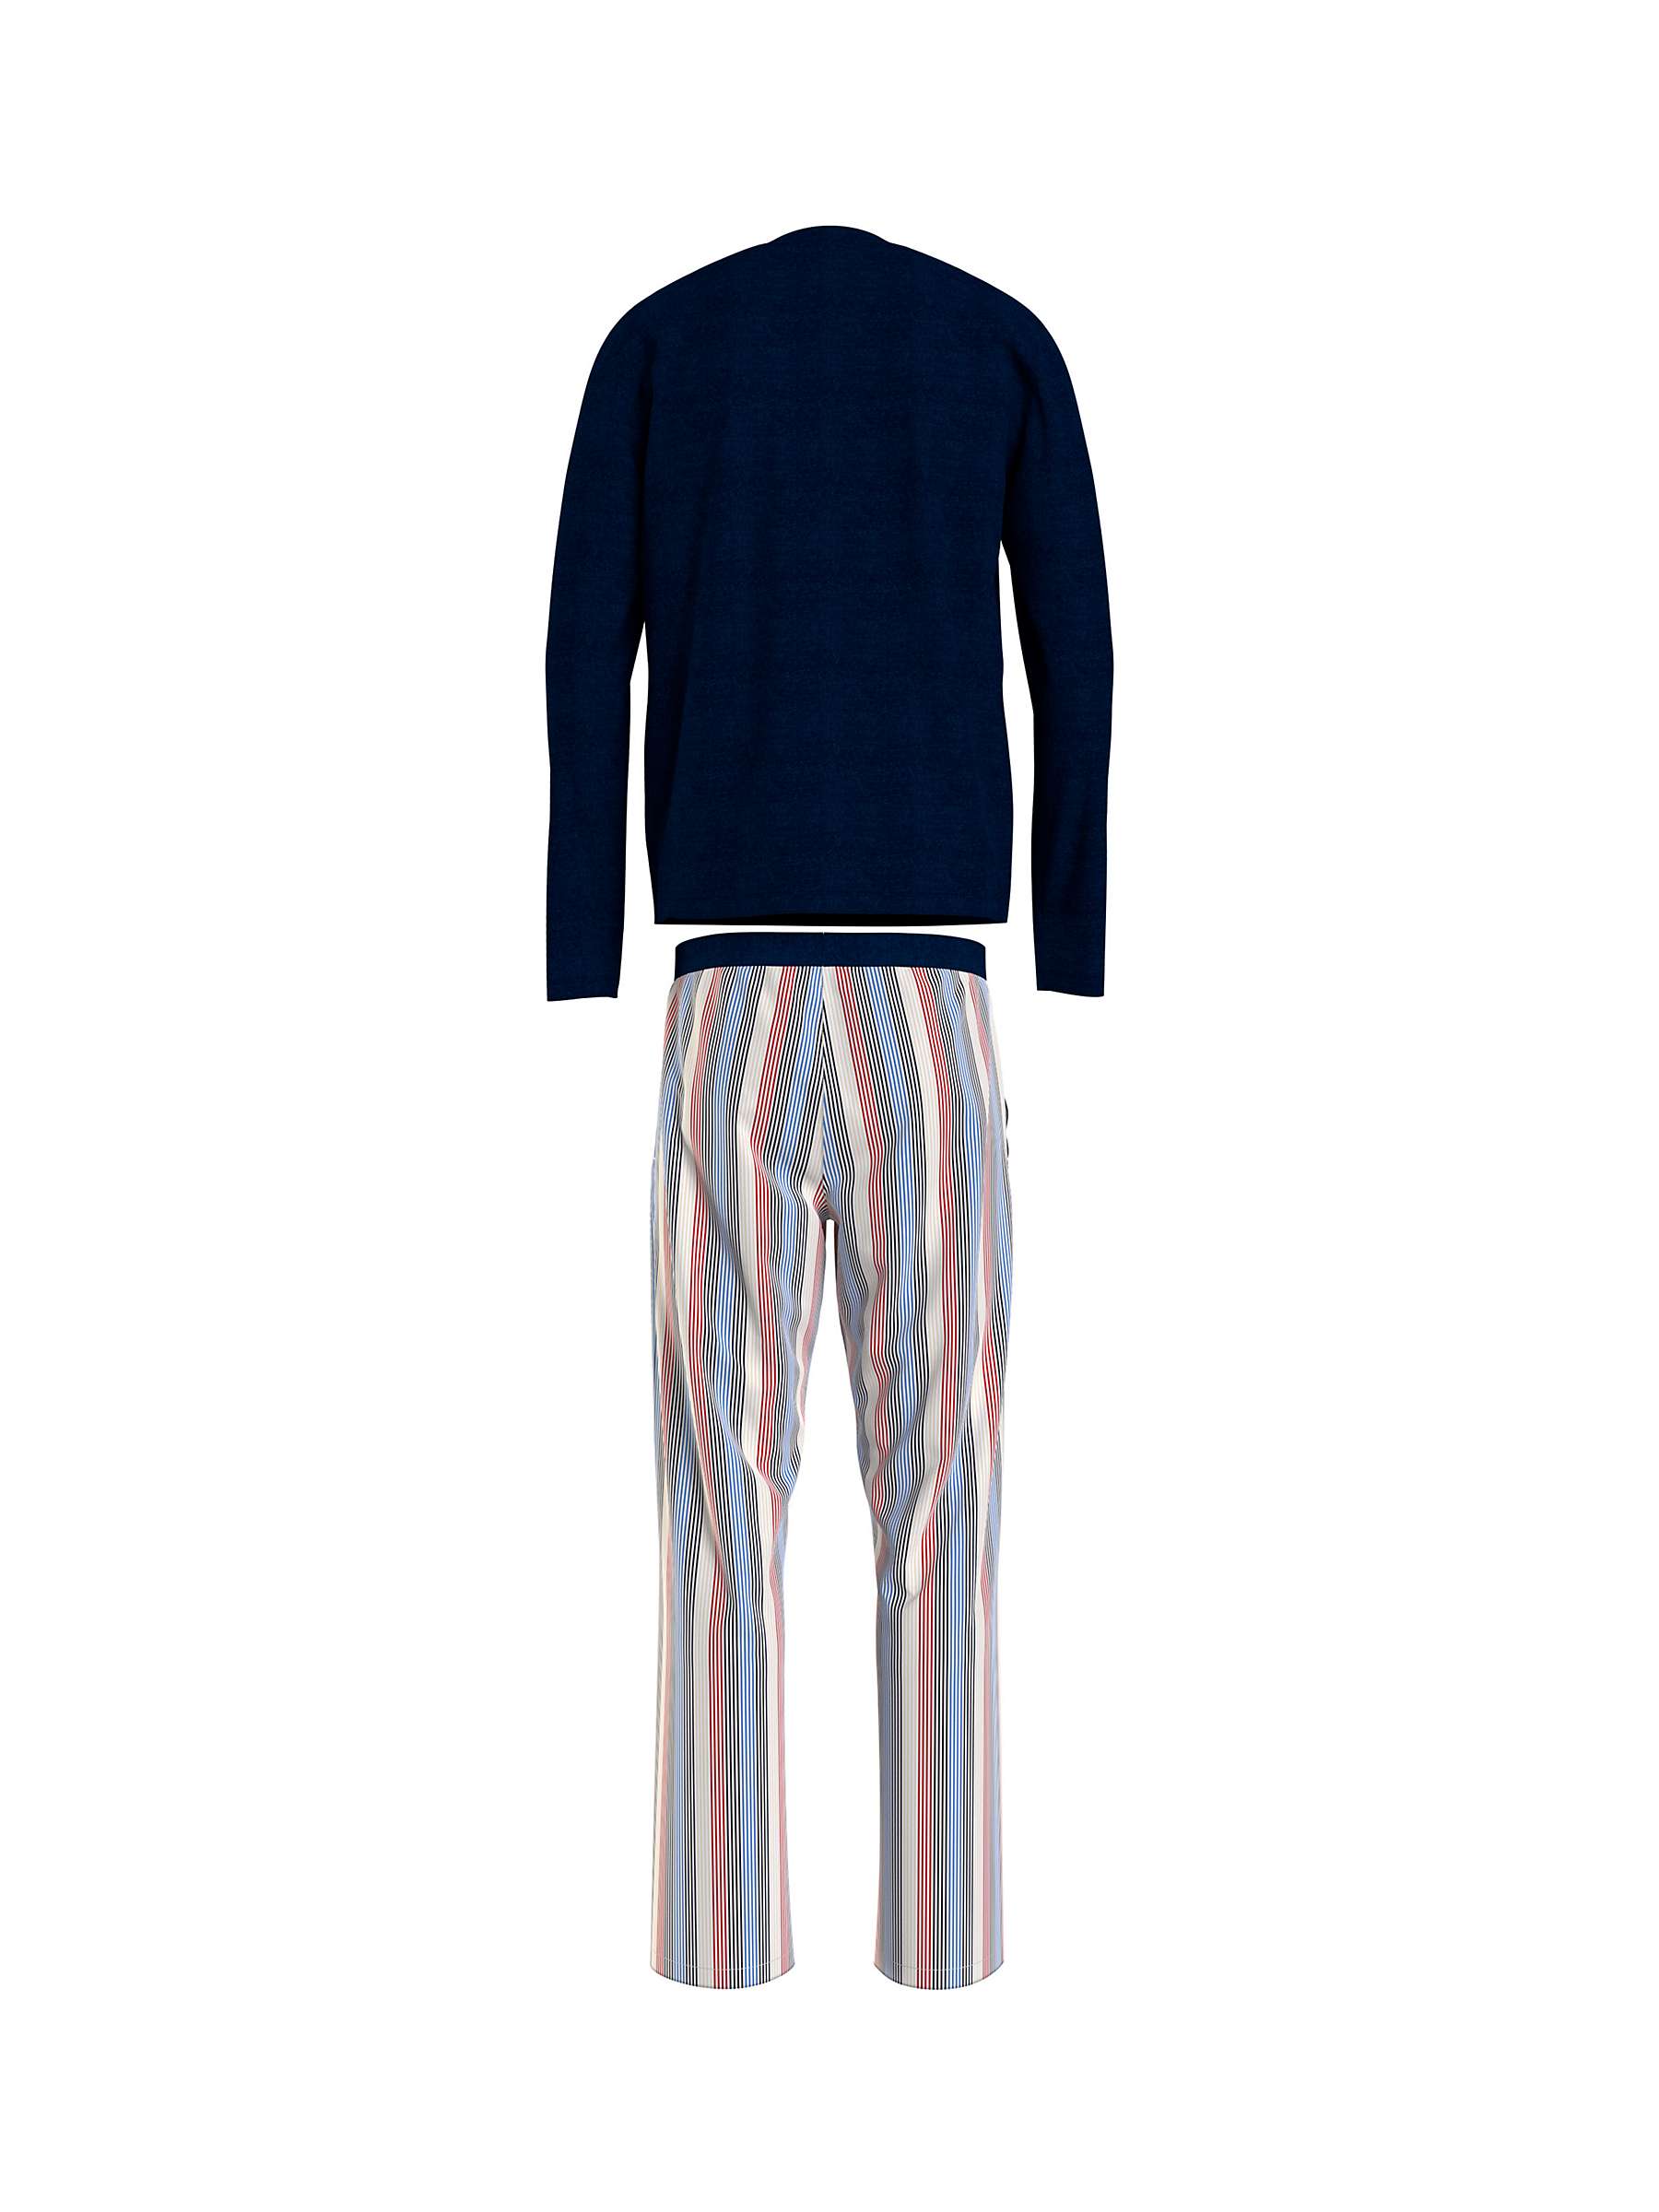 Buy Tommy Hilfiger Classic Cotton Pyjama Set Online at johnlewis.com